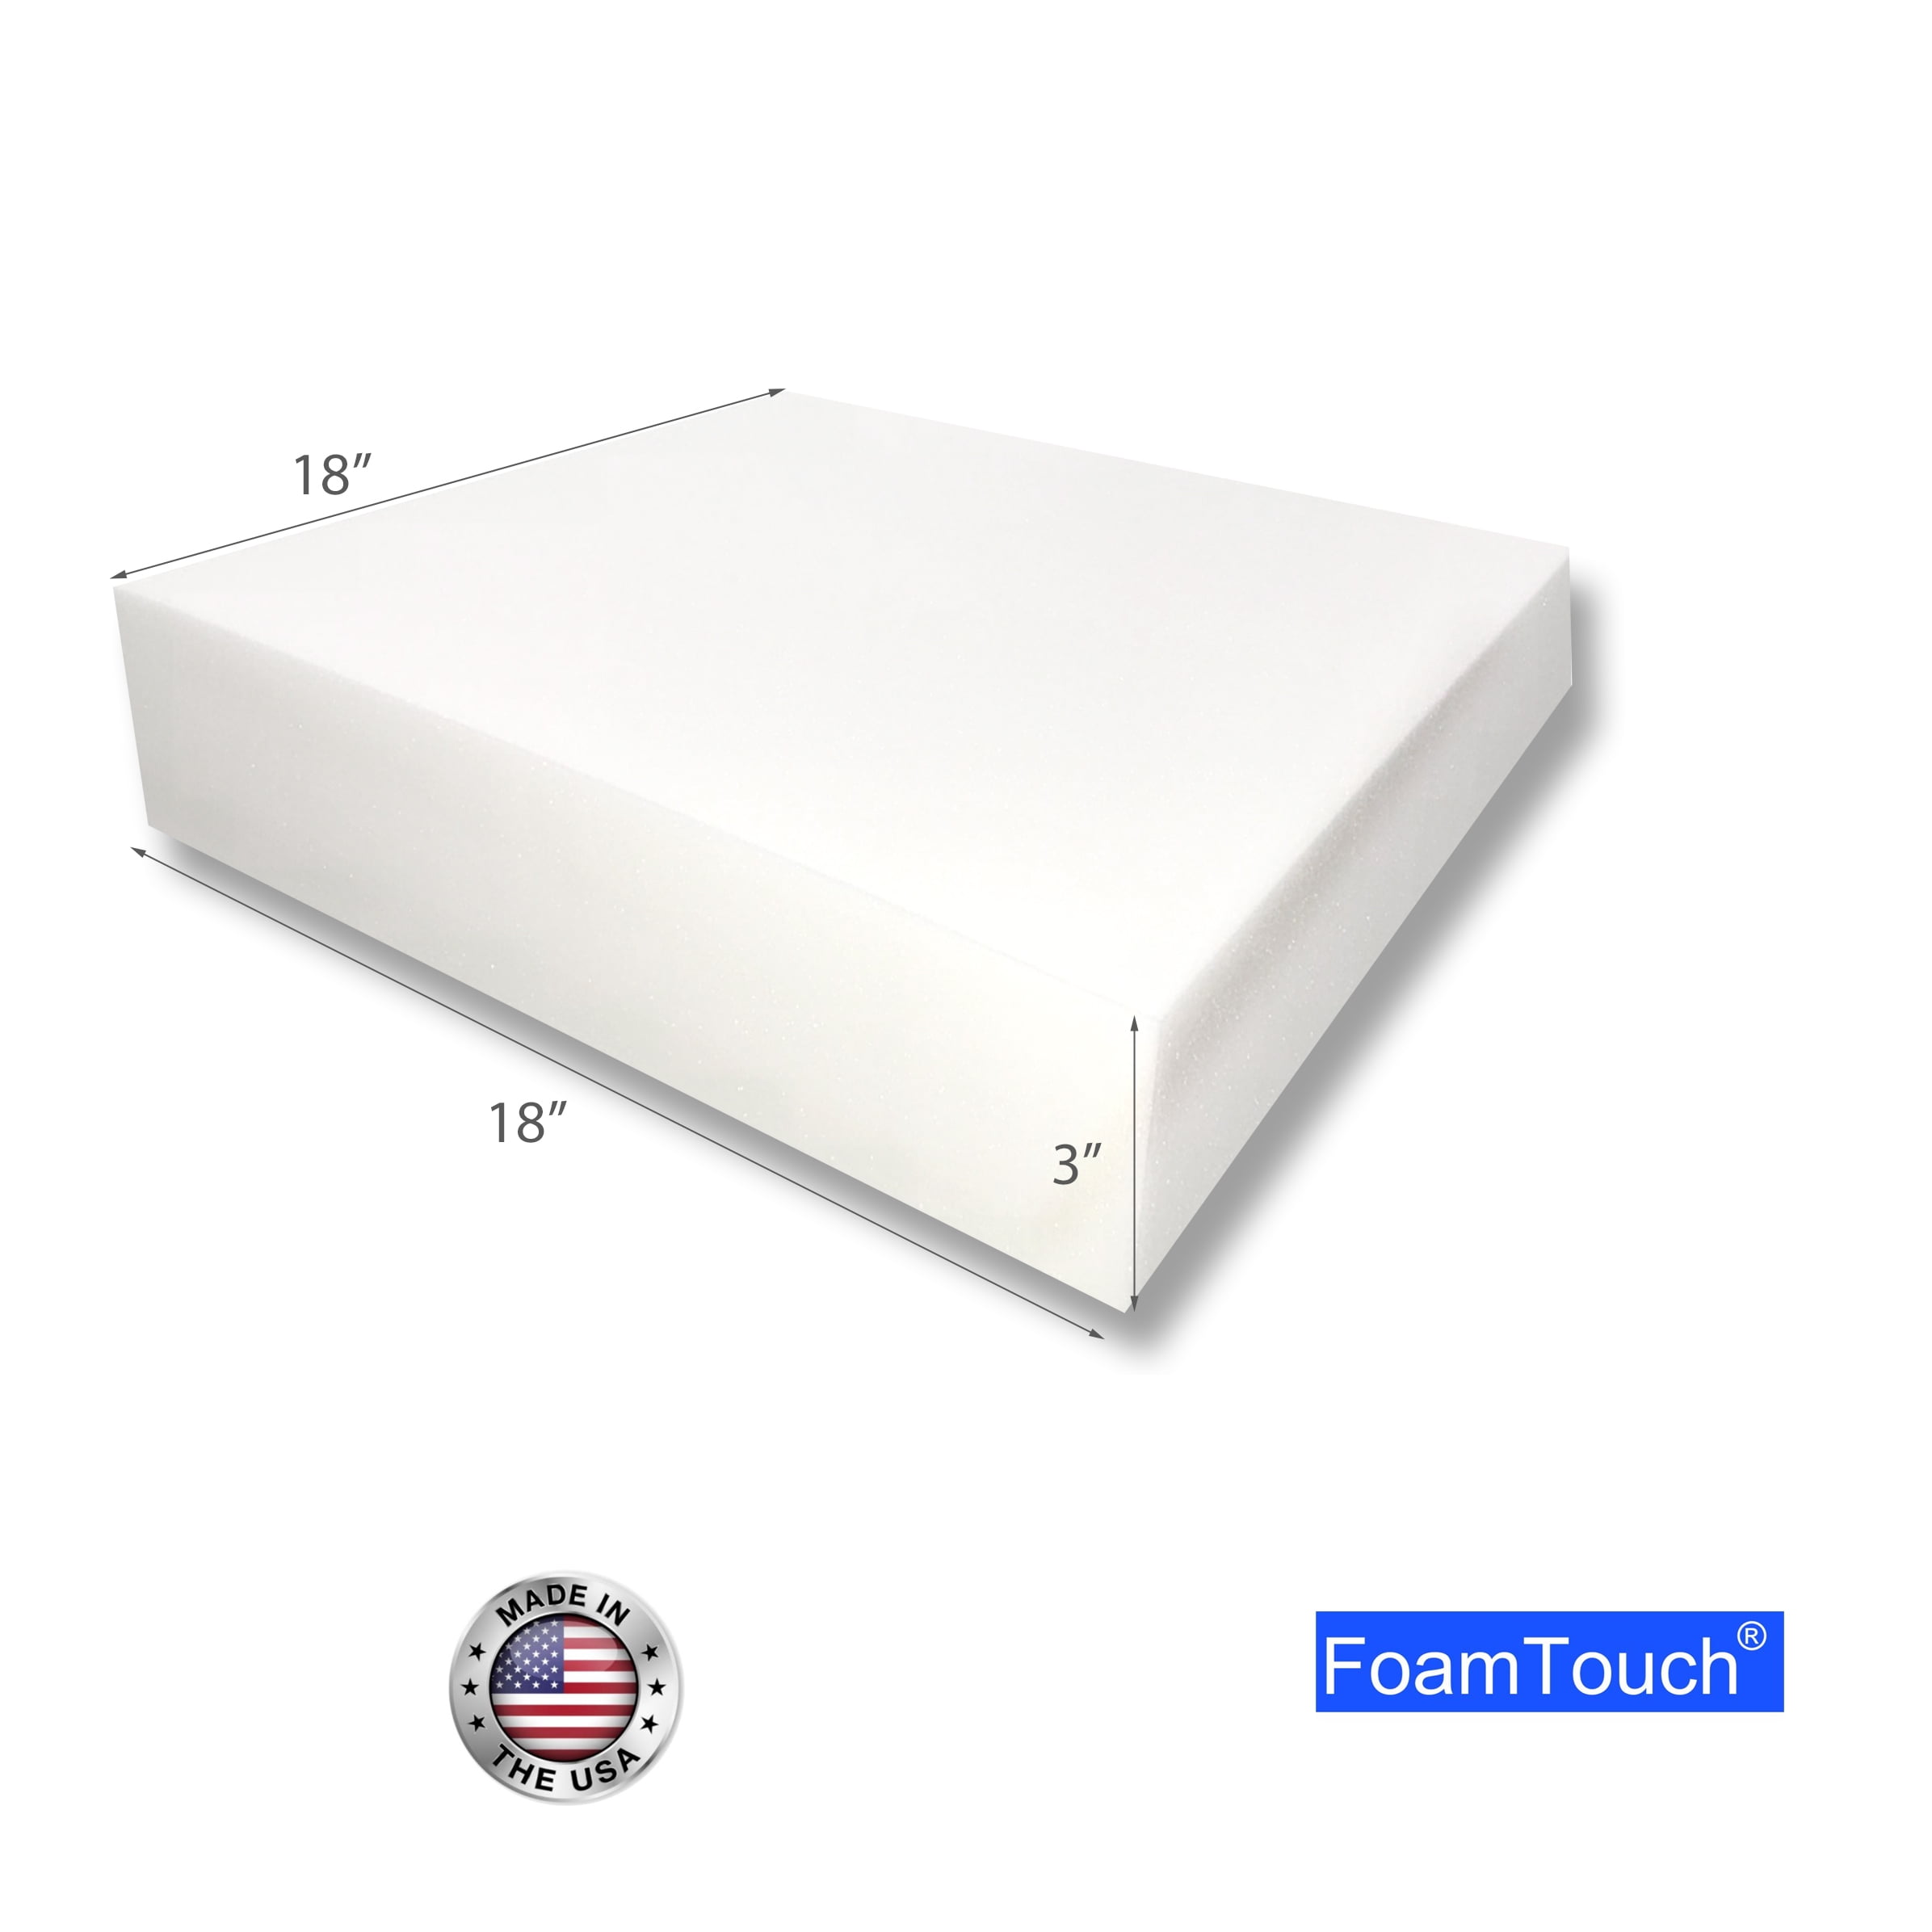 Upholstery Foam 4 Thick, 18 Wide X 72 Long Regular Density